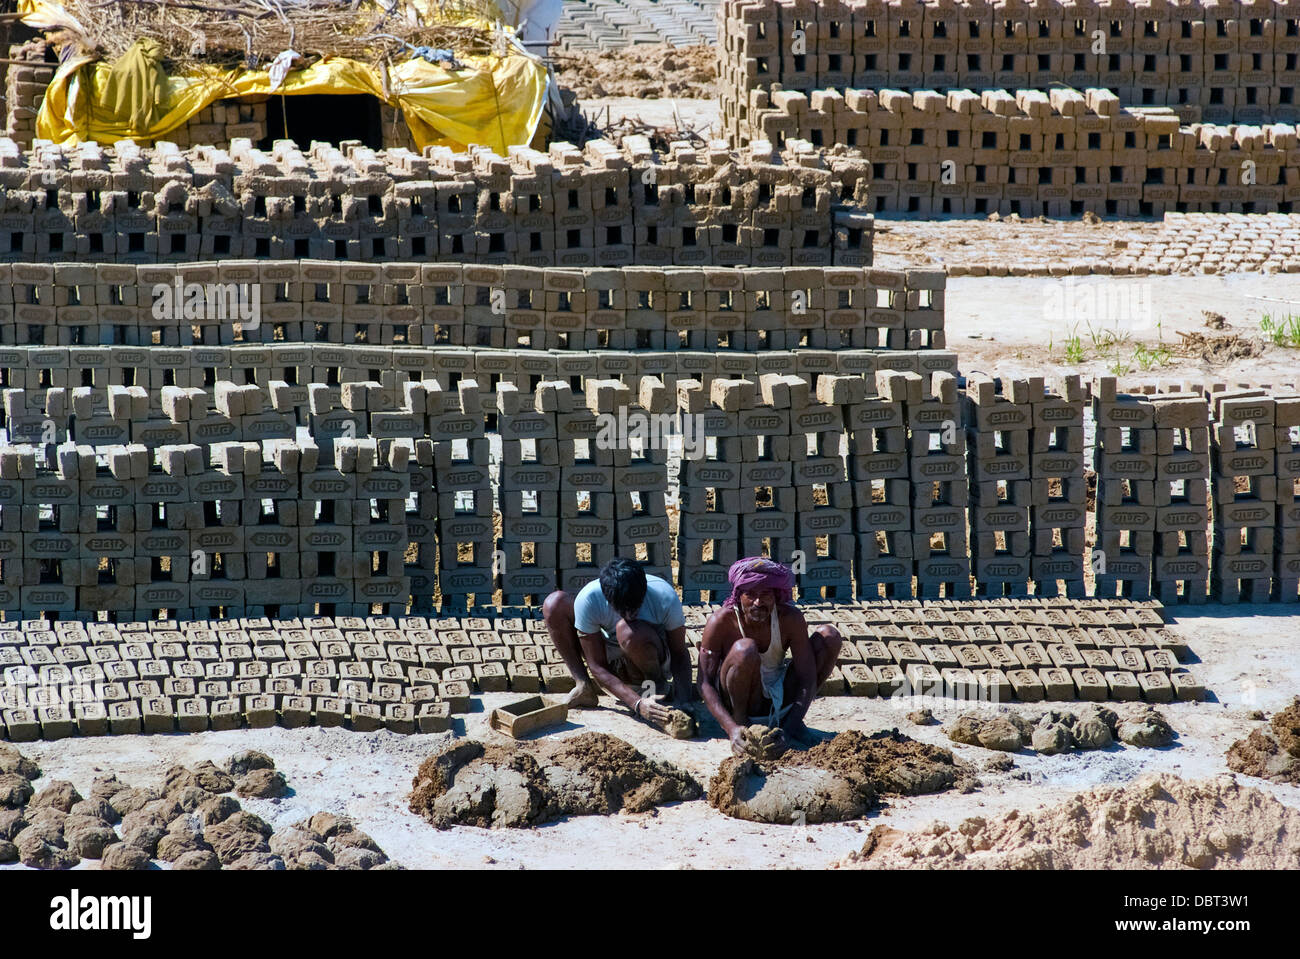 Labourers prepare bricks at a brick kiln on March 2, 2013, in Uttar Pradesh, India. Stock Photo